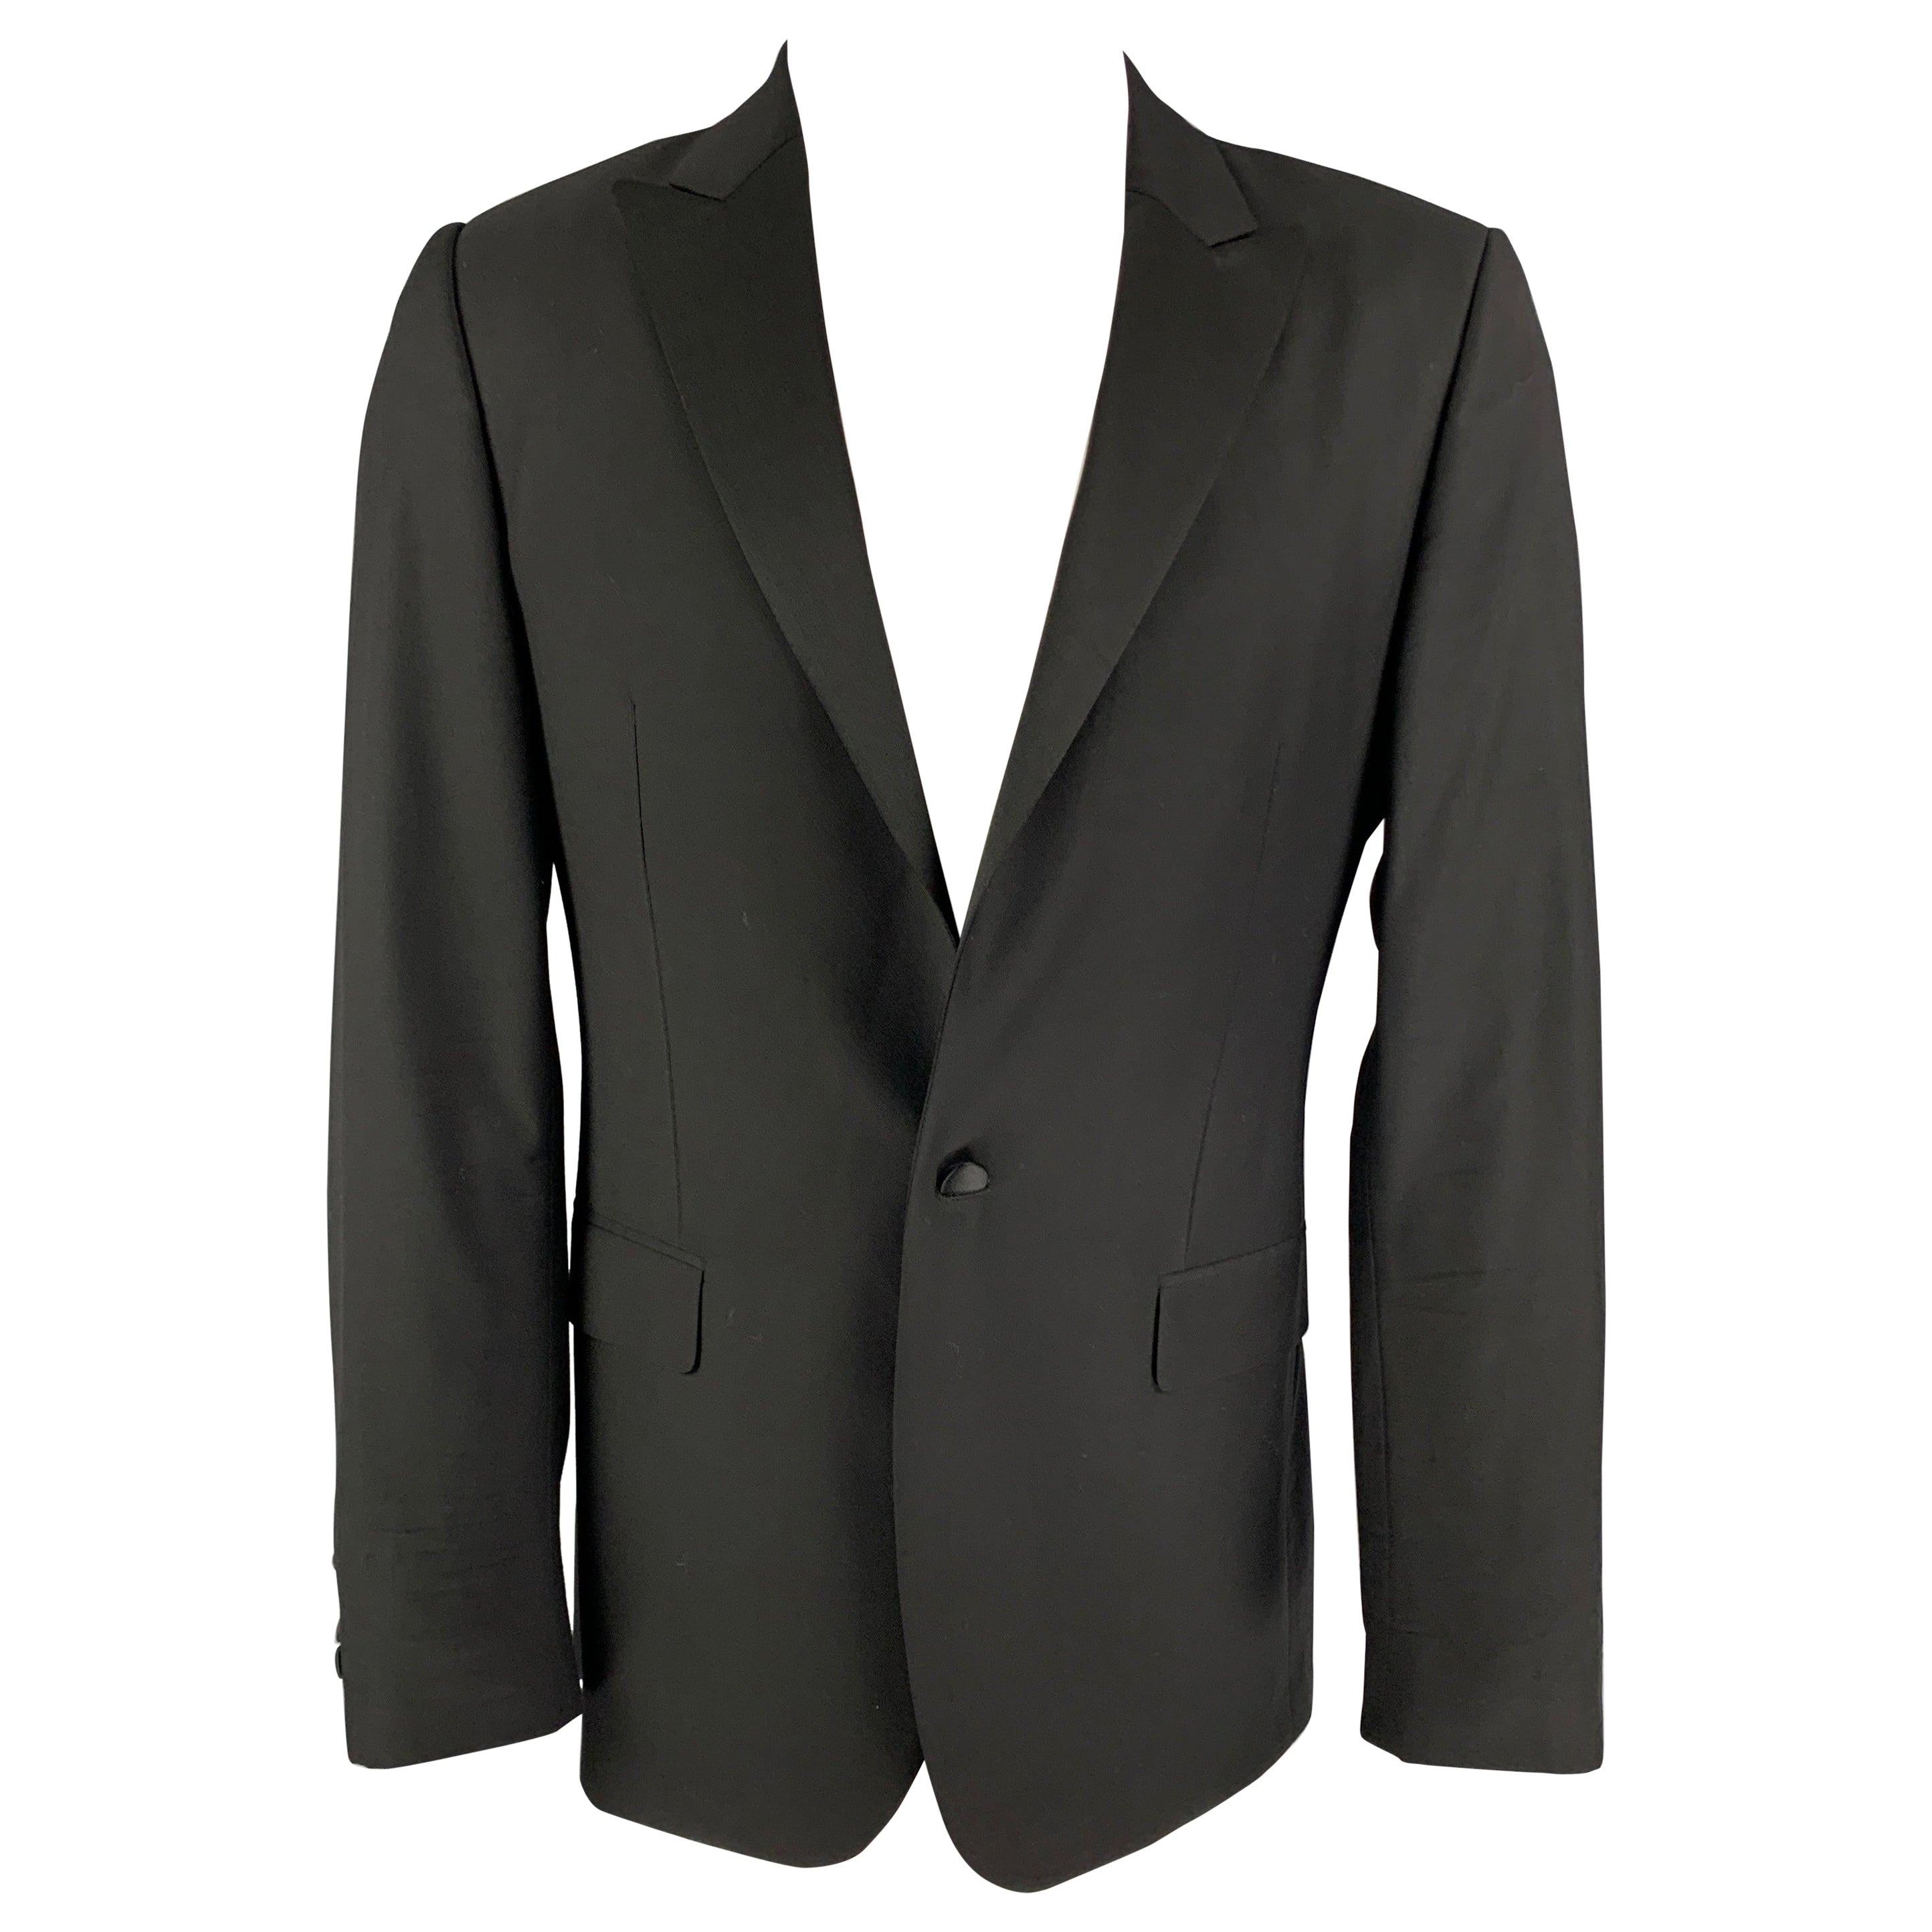 CALVIN KLEIN COLLECTION Size 38 Black Wool Peak Lapel Sport Coat For Sale